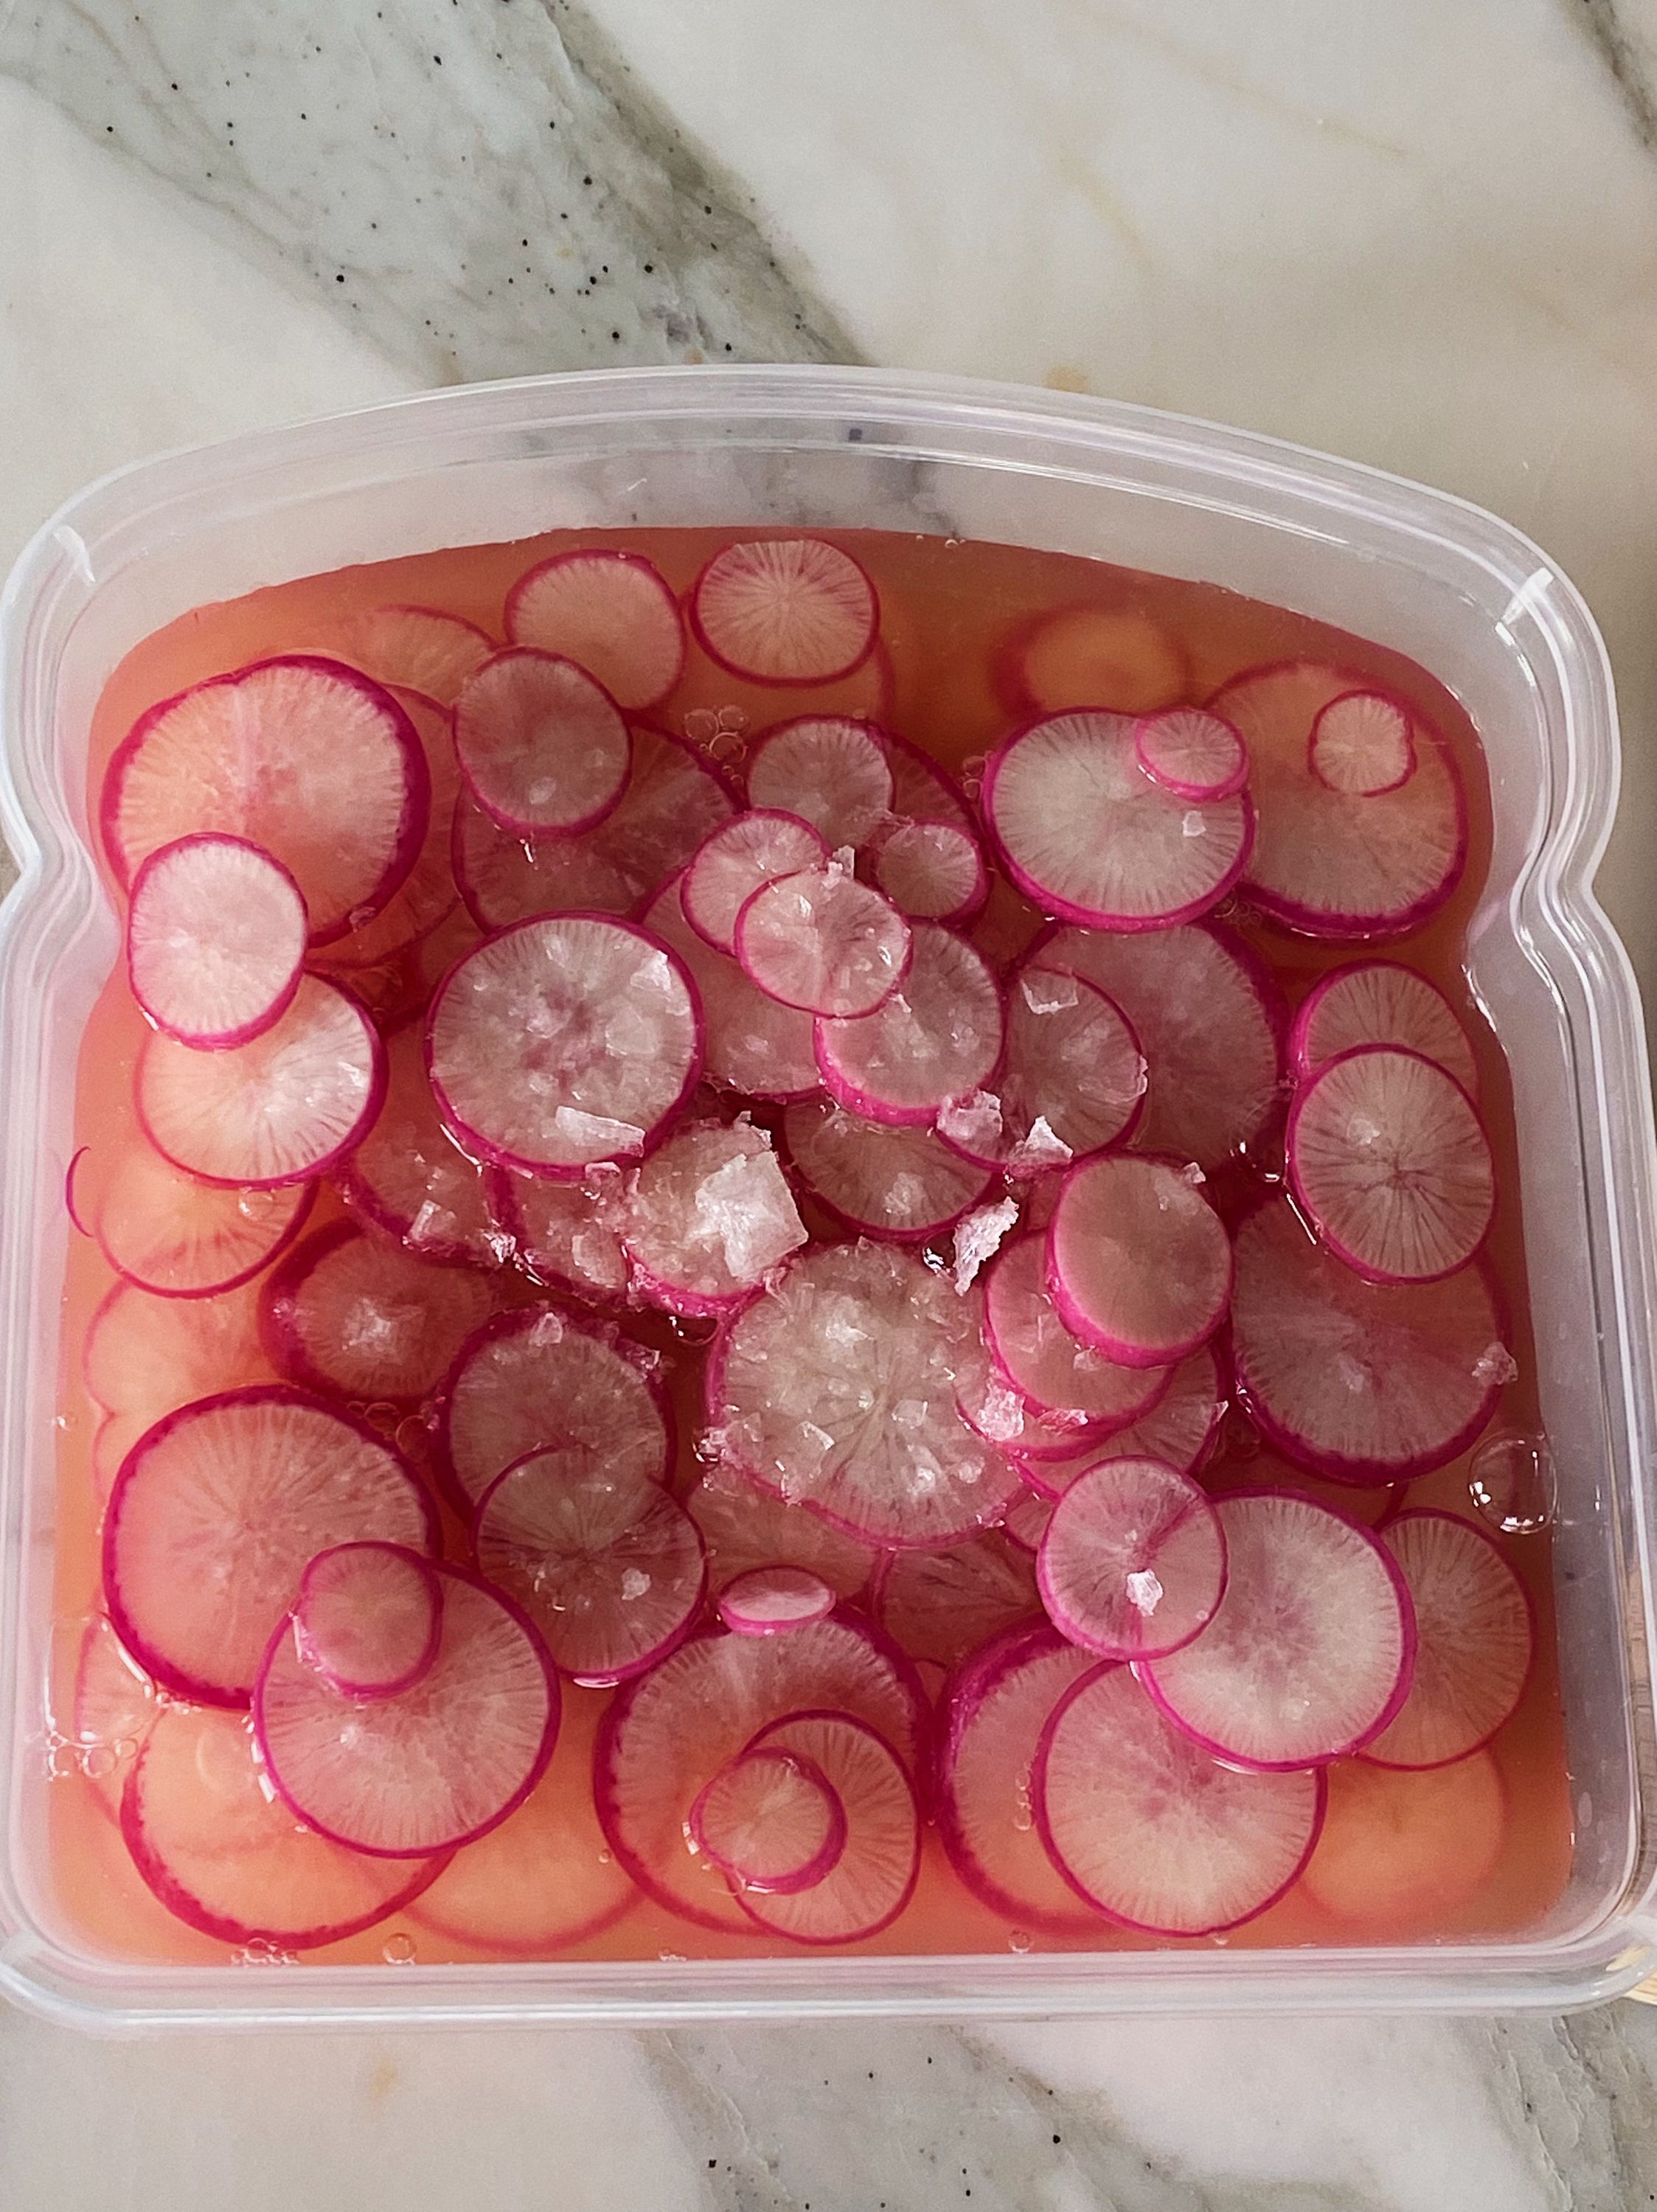 Pickled radishes, before